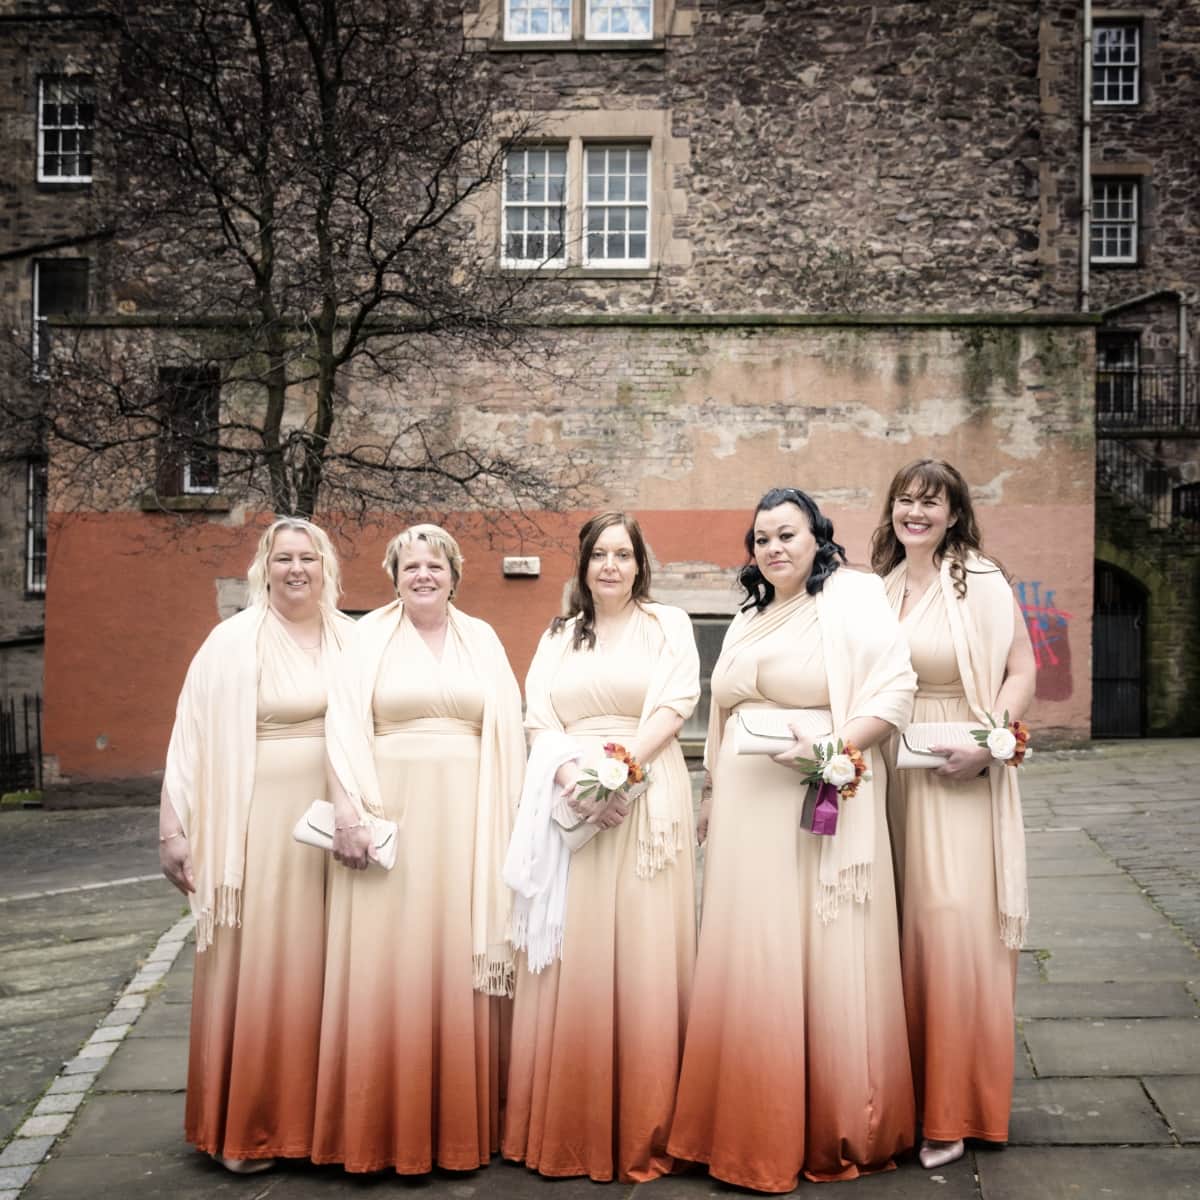 Wedding Photographers Edinburgh - Ewan Mathers - Photographer